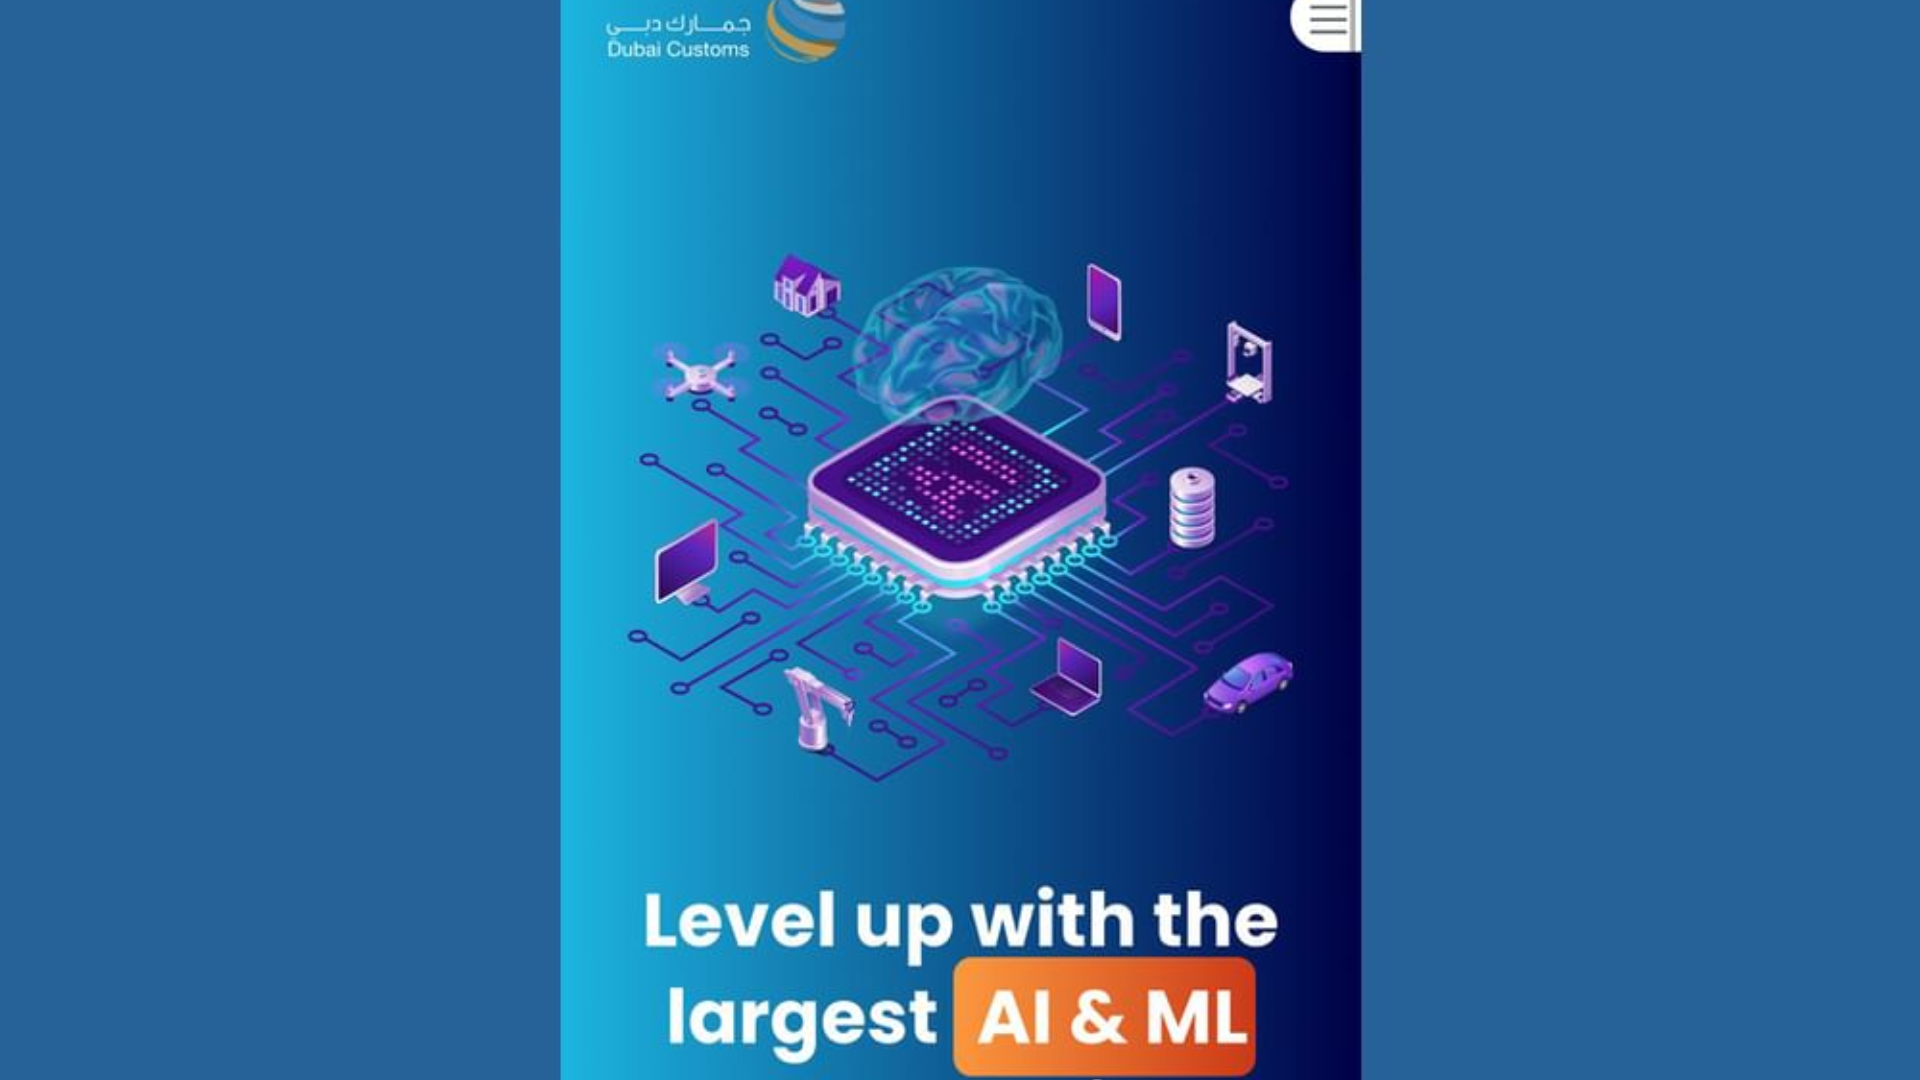 PCFC Unveils AI Platform By Dubai Customs To Enhance Innovation And Aid SMEs